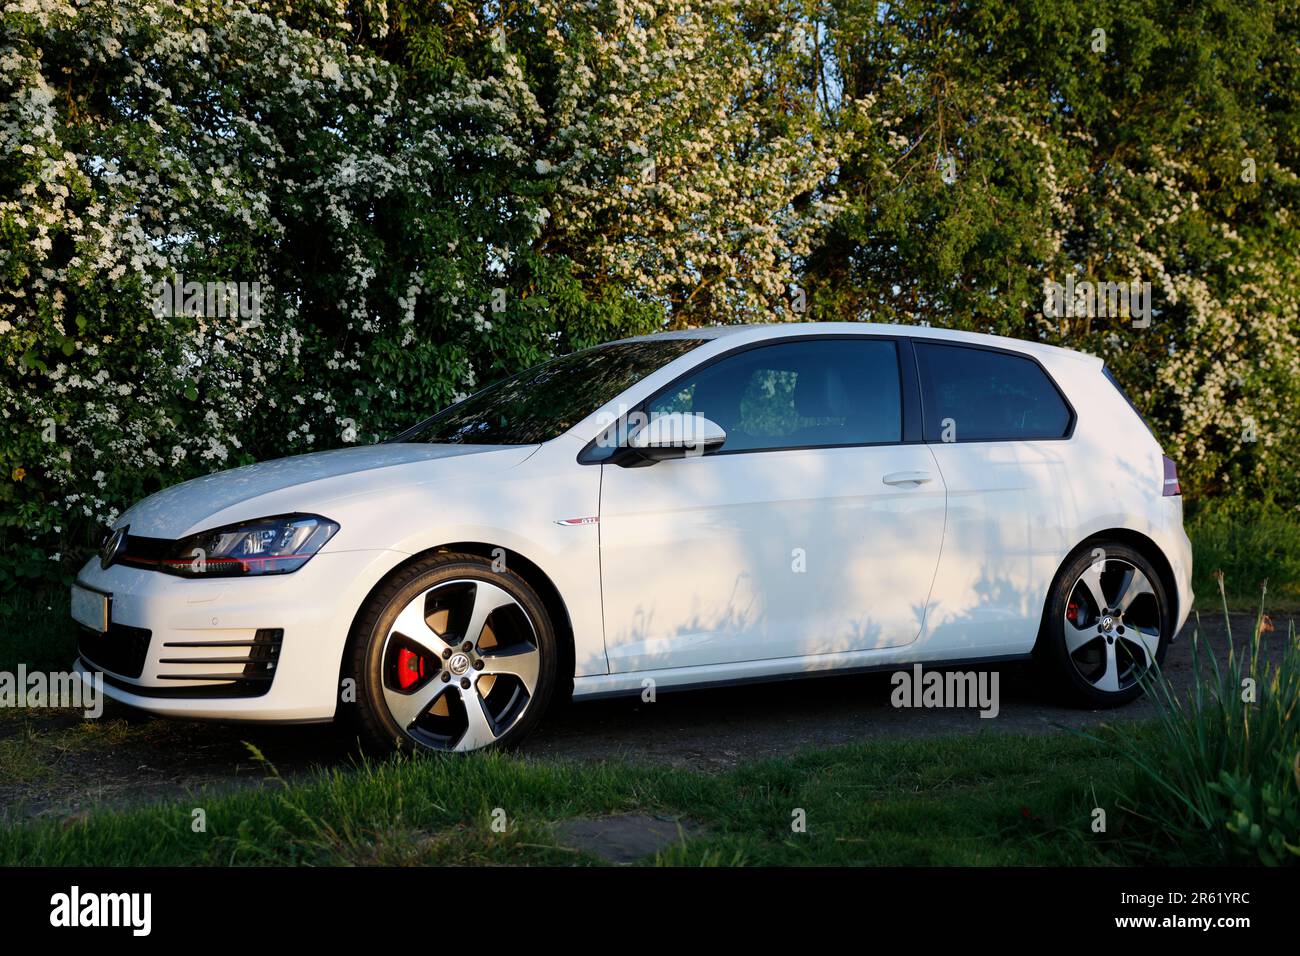 New White Car, Volkswagen Golf GTI MK7 3 door hatchback petrol car Stock Photo